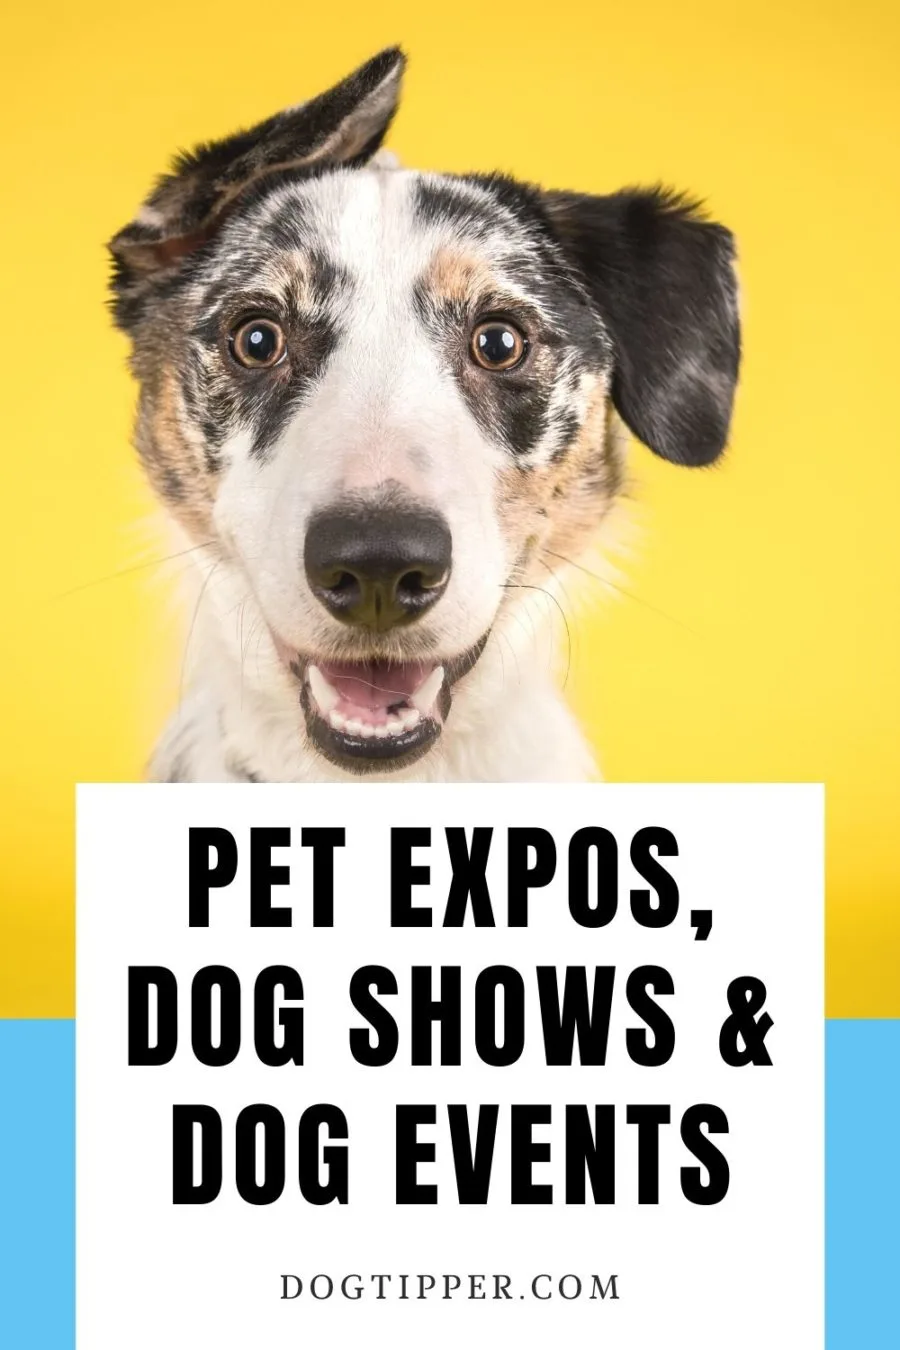 Pet Expos, Dog Shows & Dog Events